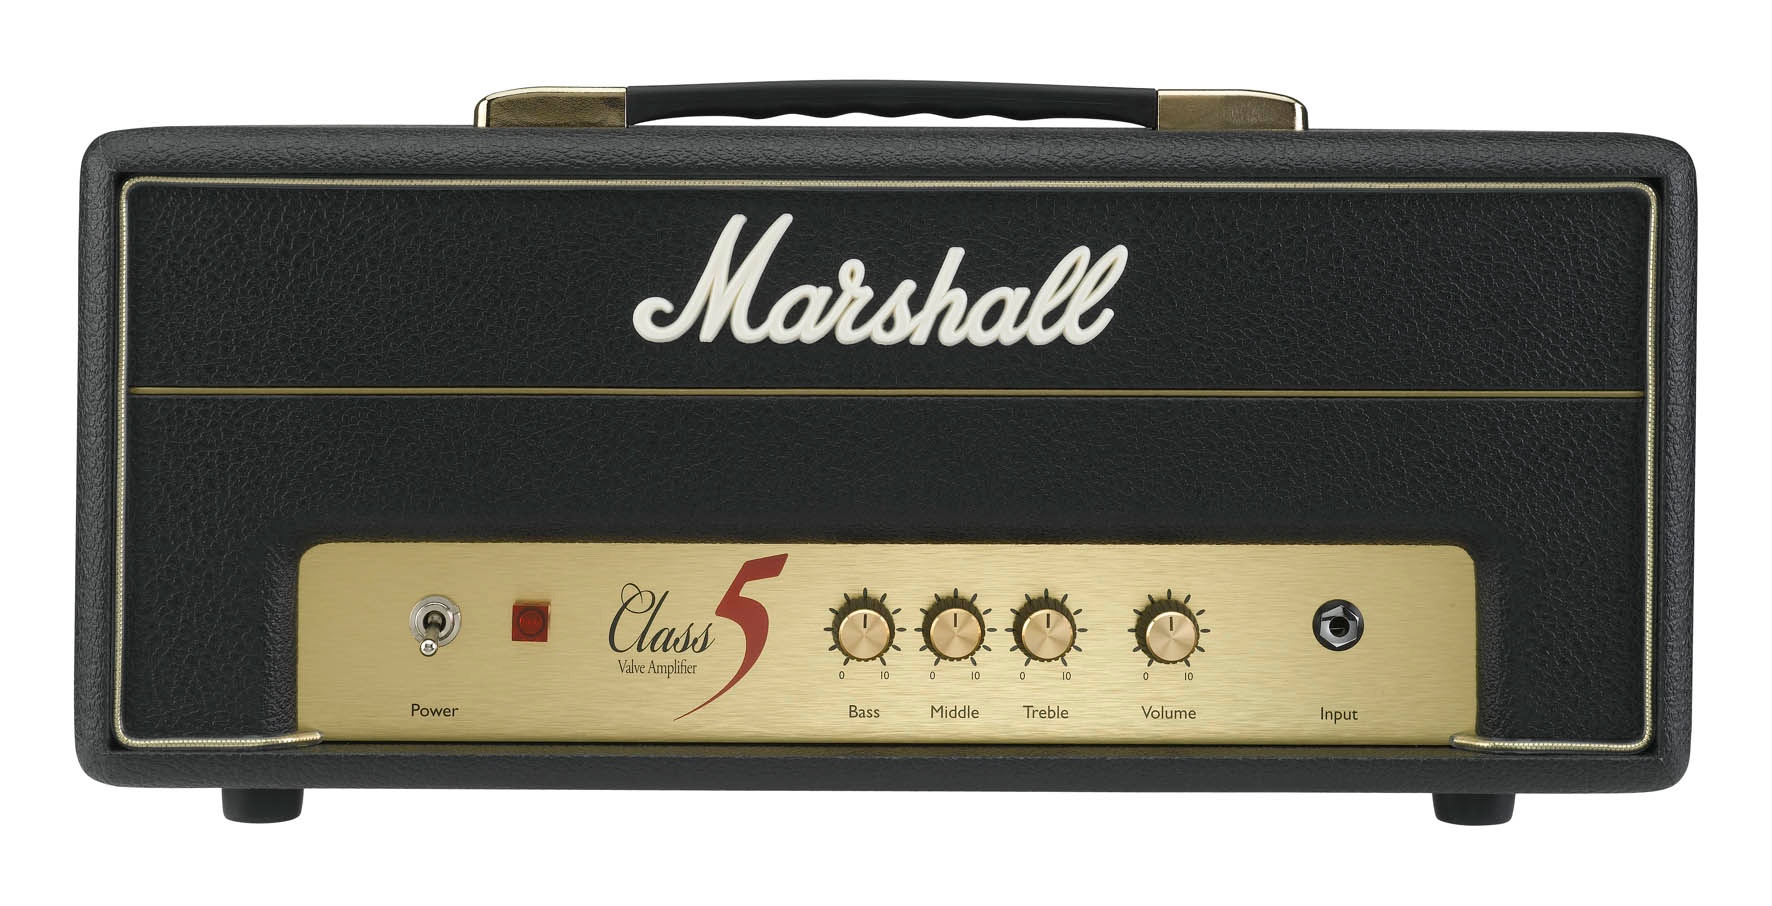 Class 5 Head - Marshall Class 5 Head - Audiofanzine